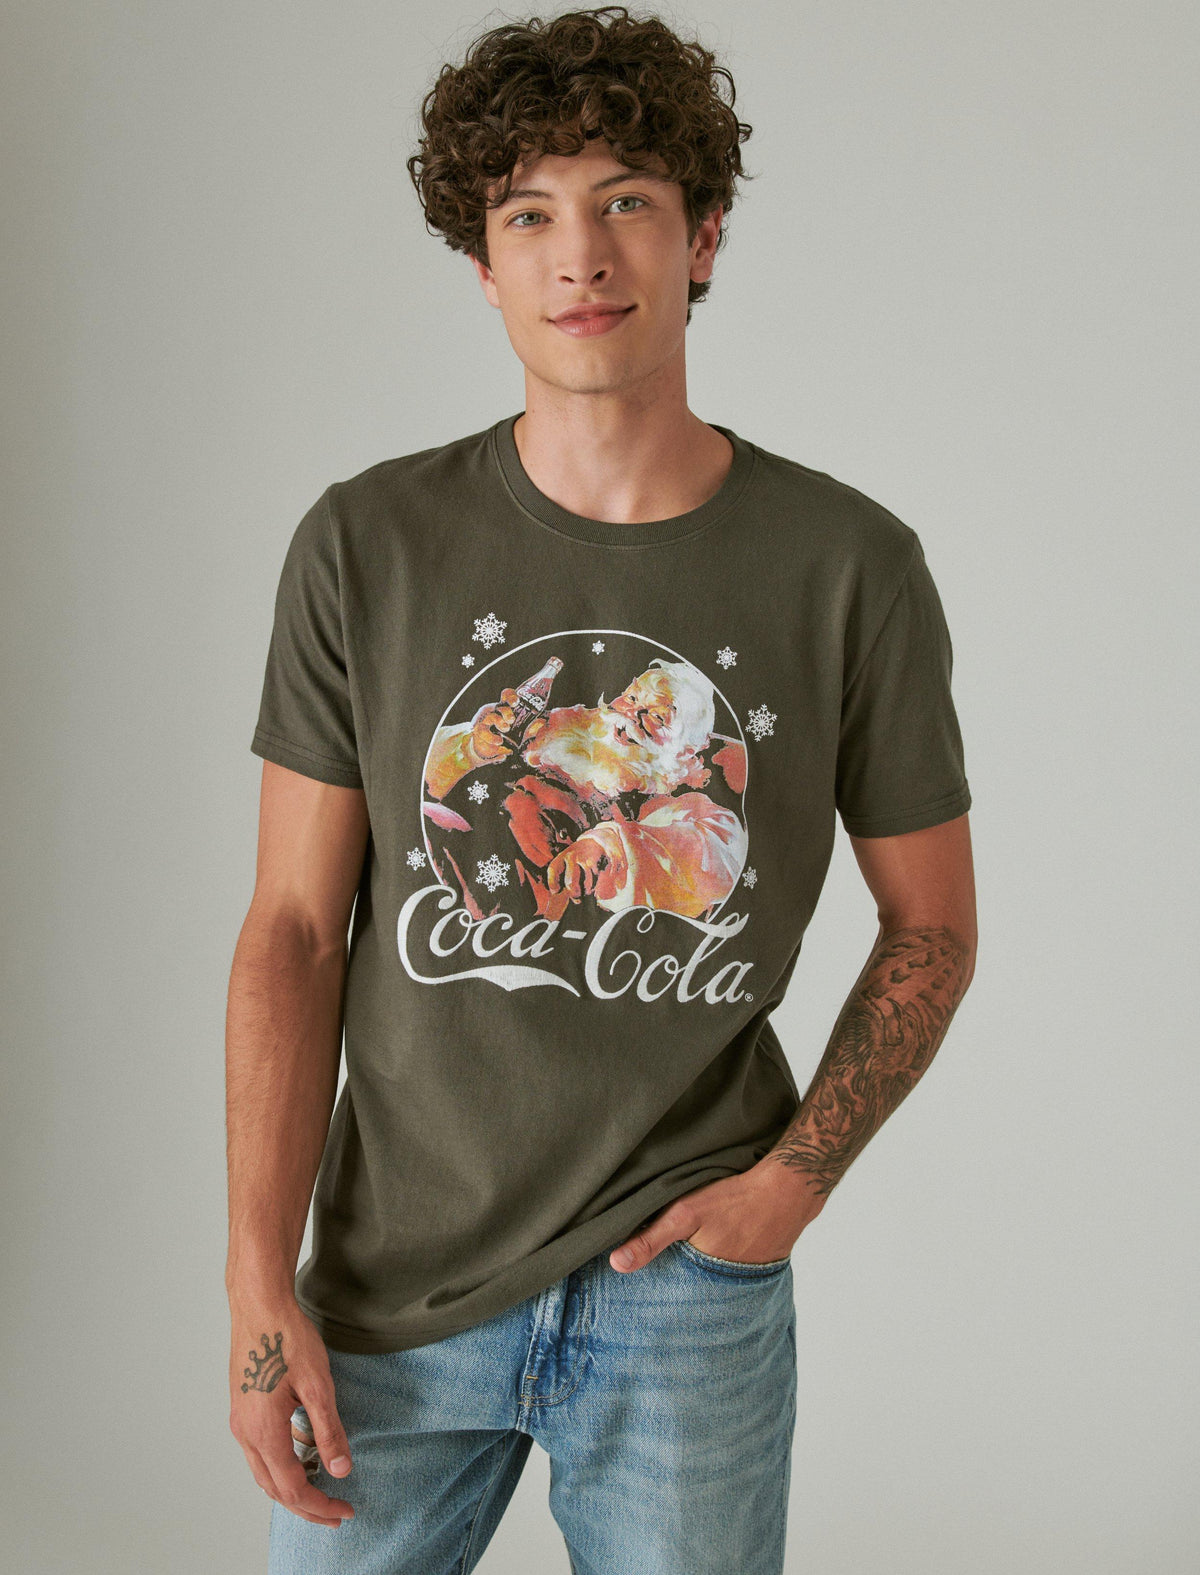 Lucky Brand Coke Santa Tee - Men's Clothing Tops Shirts Tee Graphic T Shirts Raven